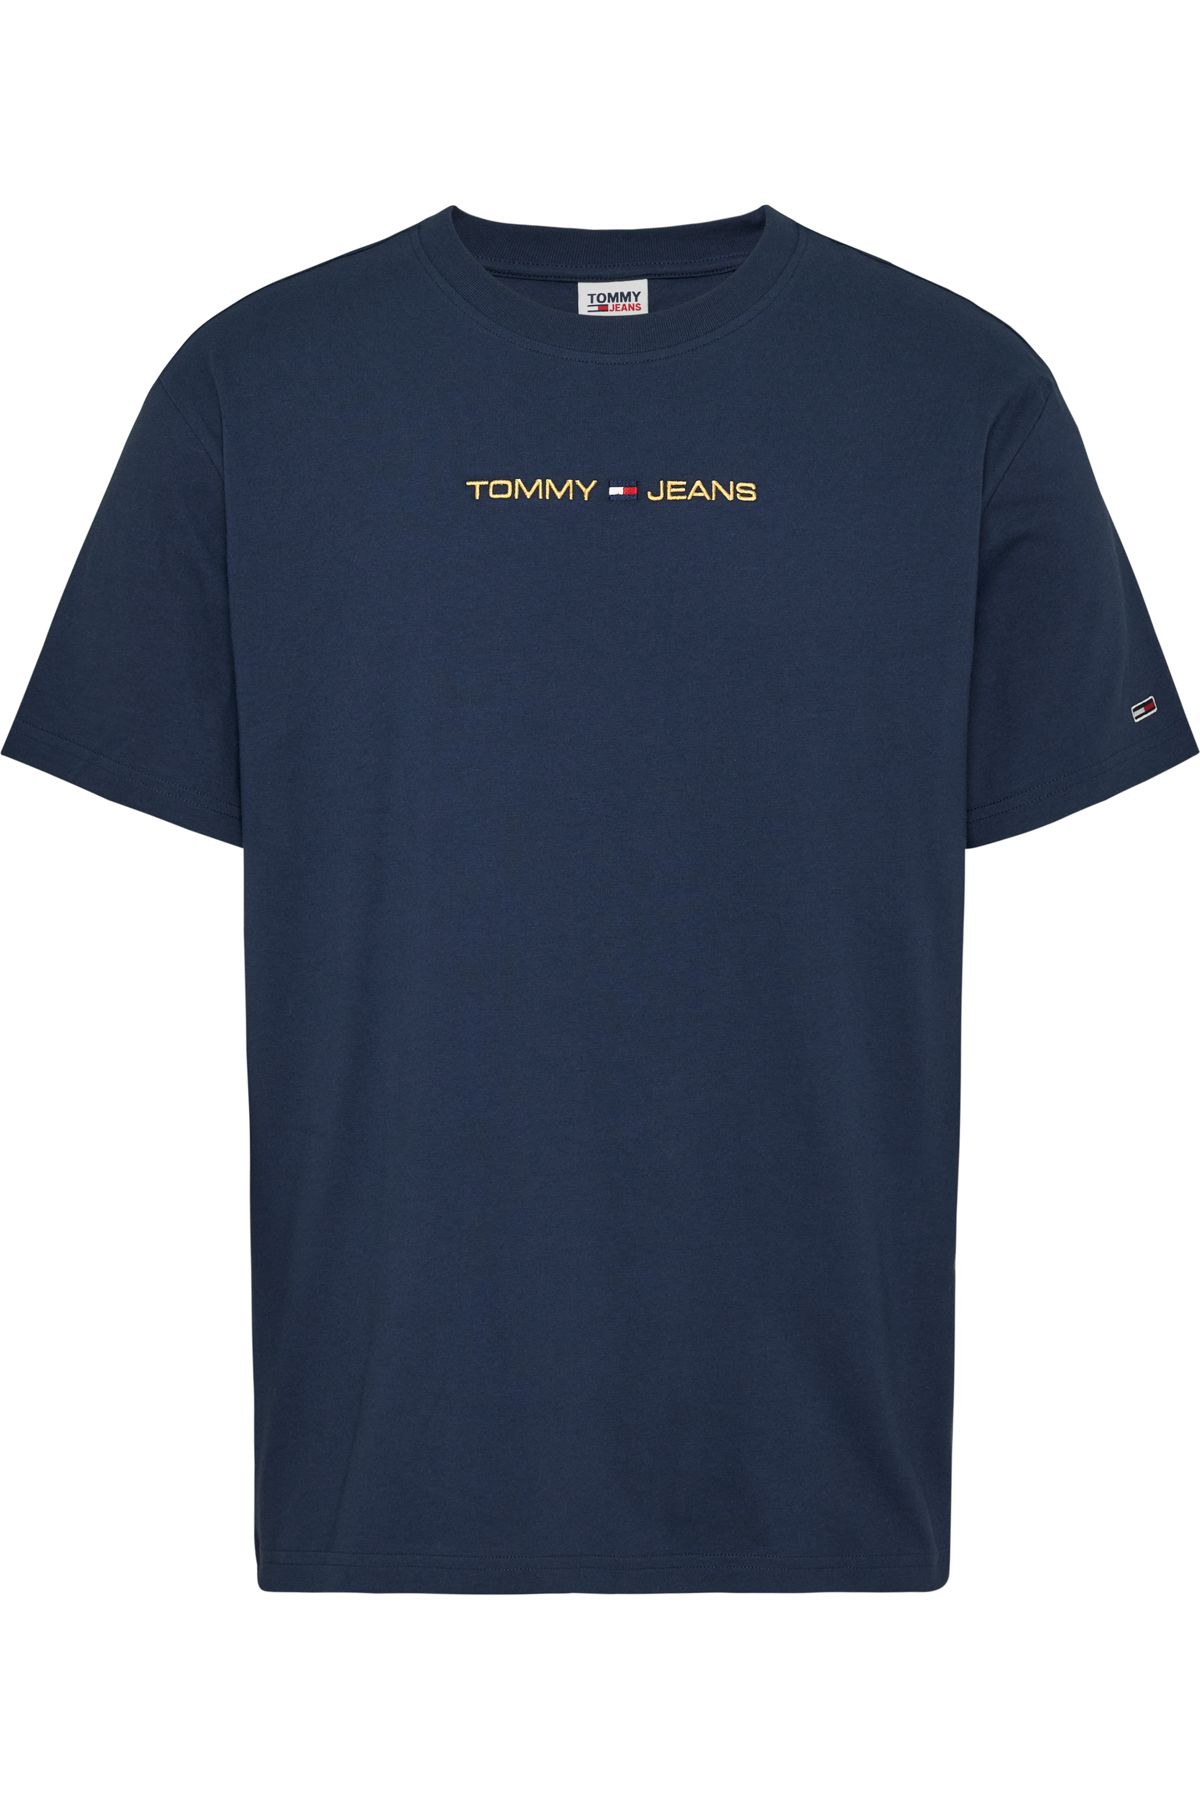 Herren Hilfiger Tommy Twilight - Navy T-Shirt Trendyol